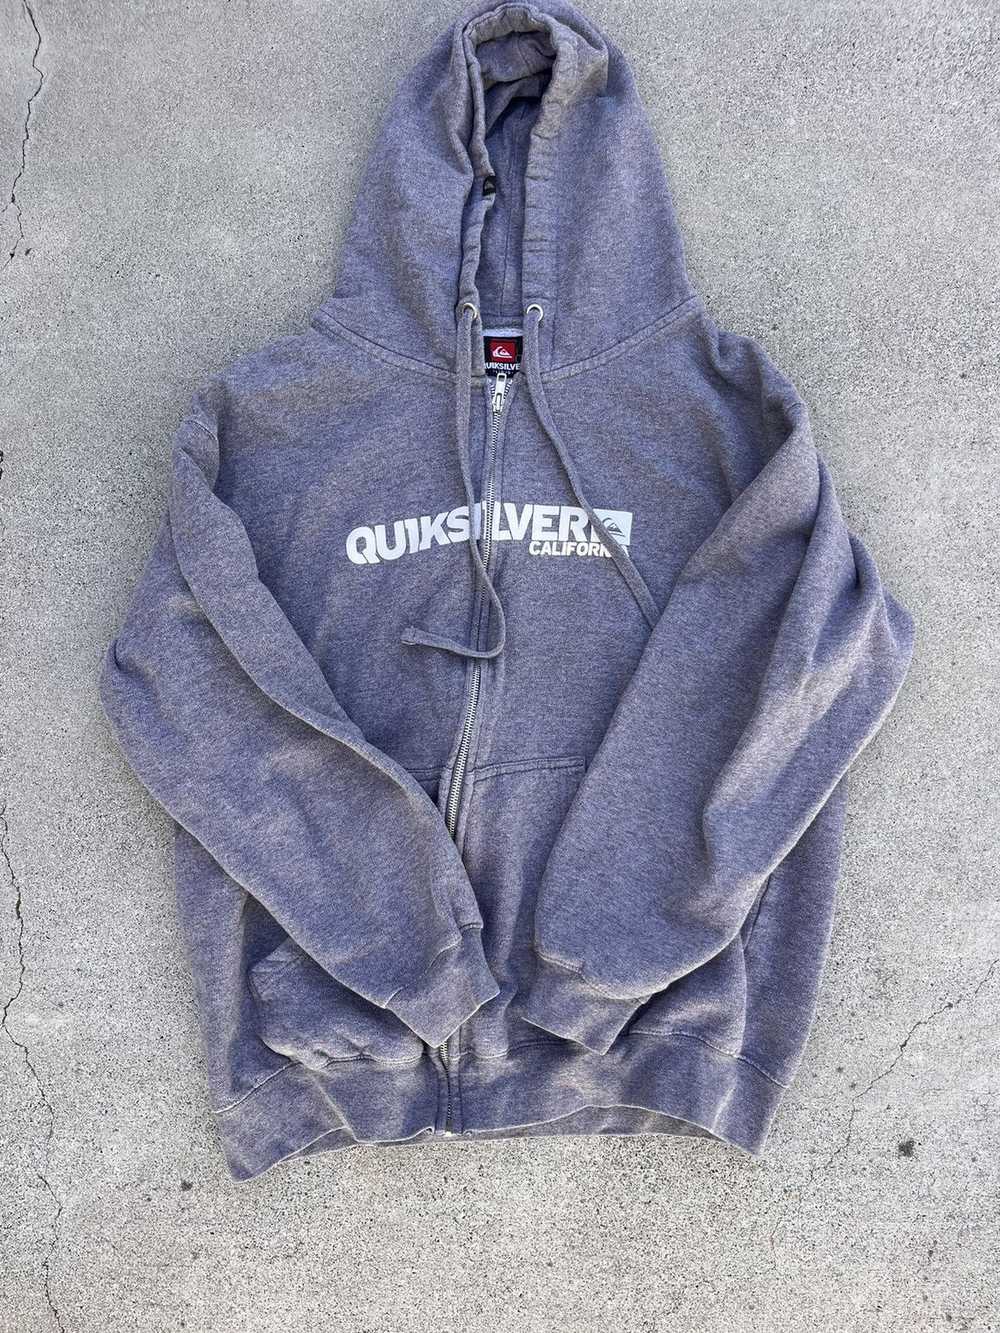 Quiksilver Vintage Quicksilver Jacket - image 1